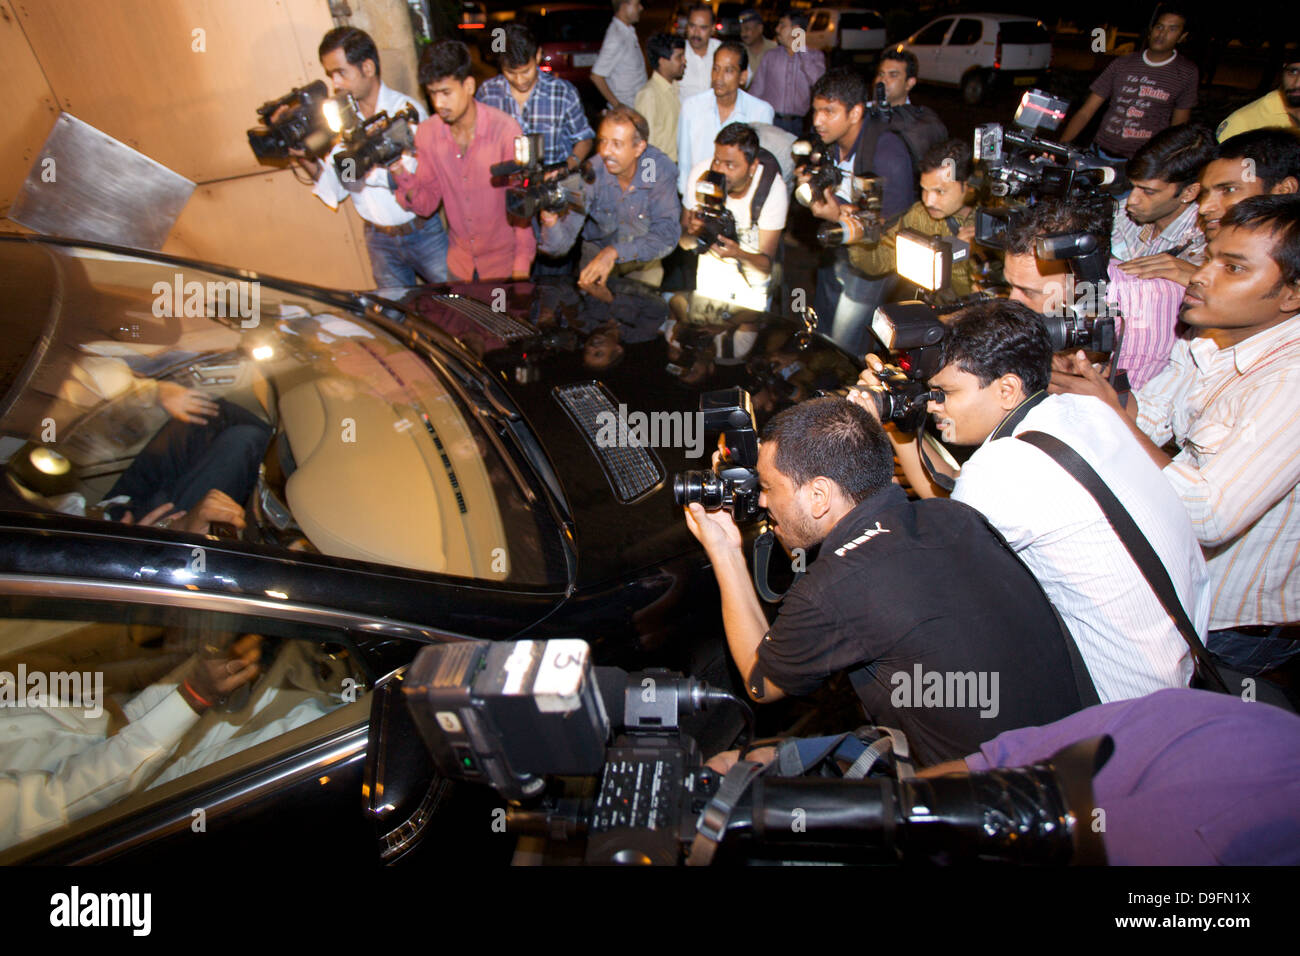 Paparazzi ambushing the car of a Bollywood star in Mumbai, India. Stock Photo